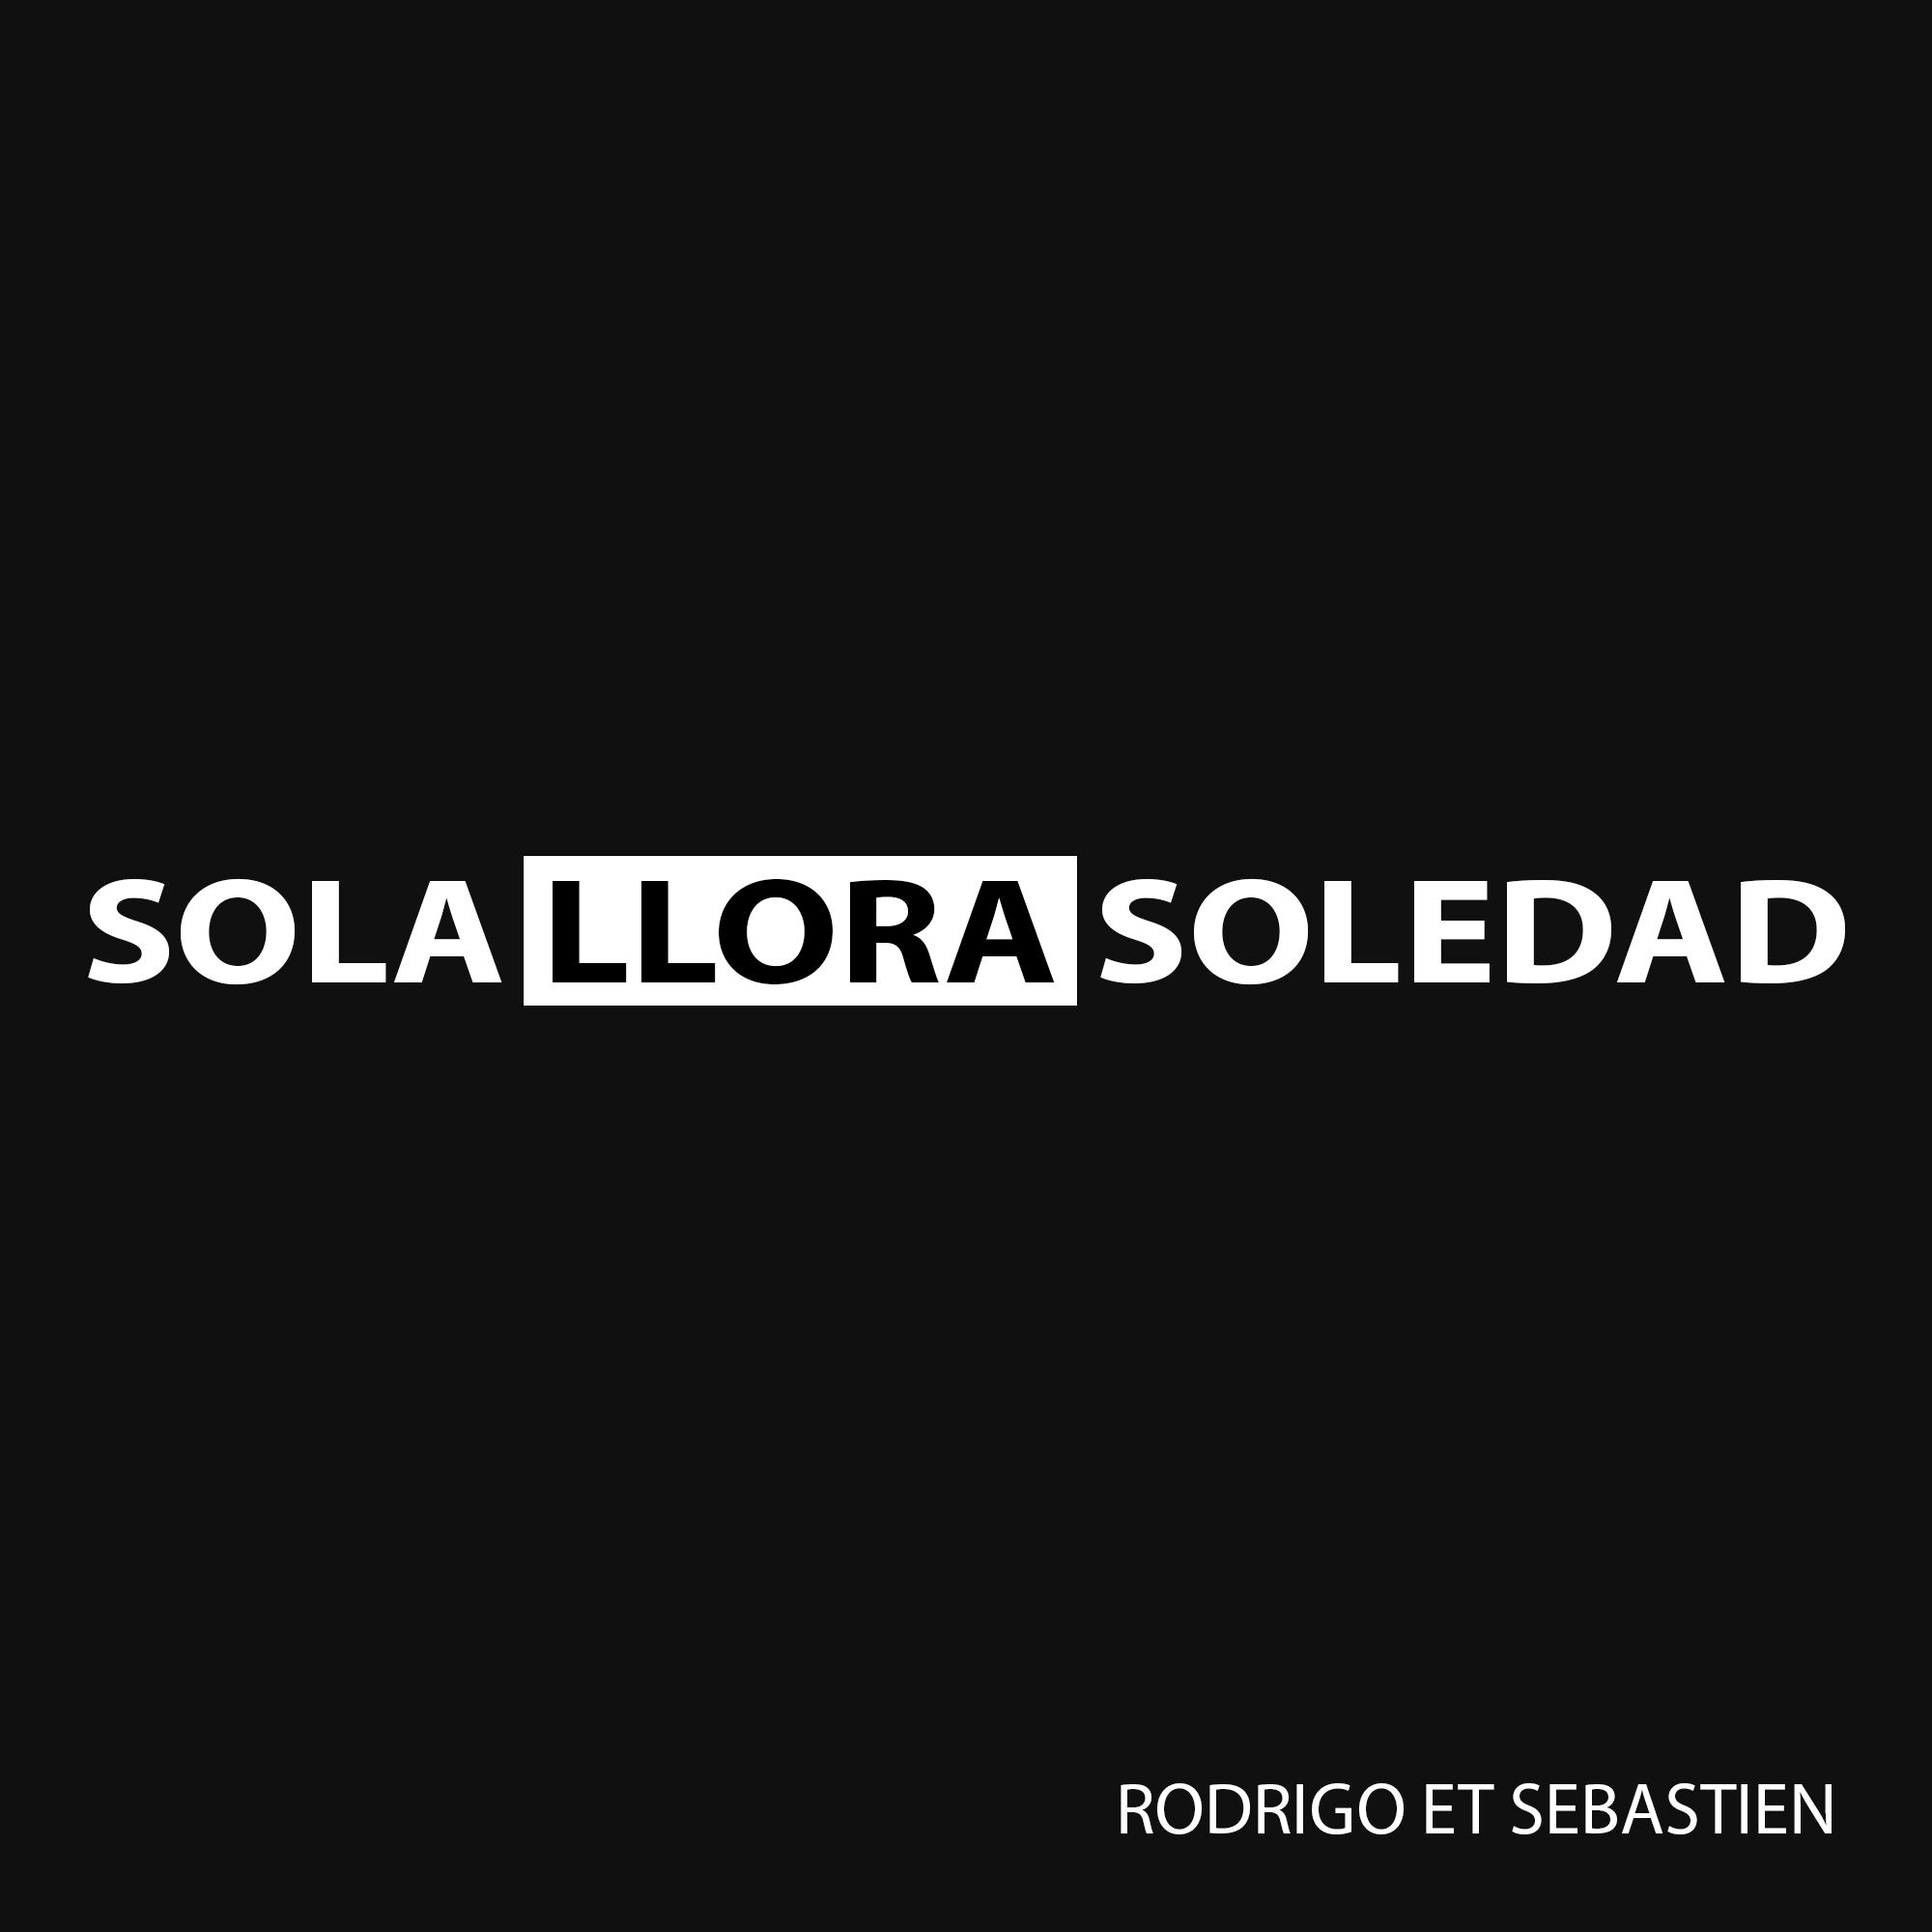 SOLA LLORA SOLEDAD - Rodrigo et Sébastien